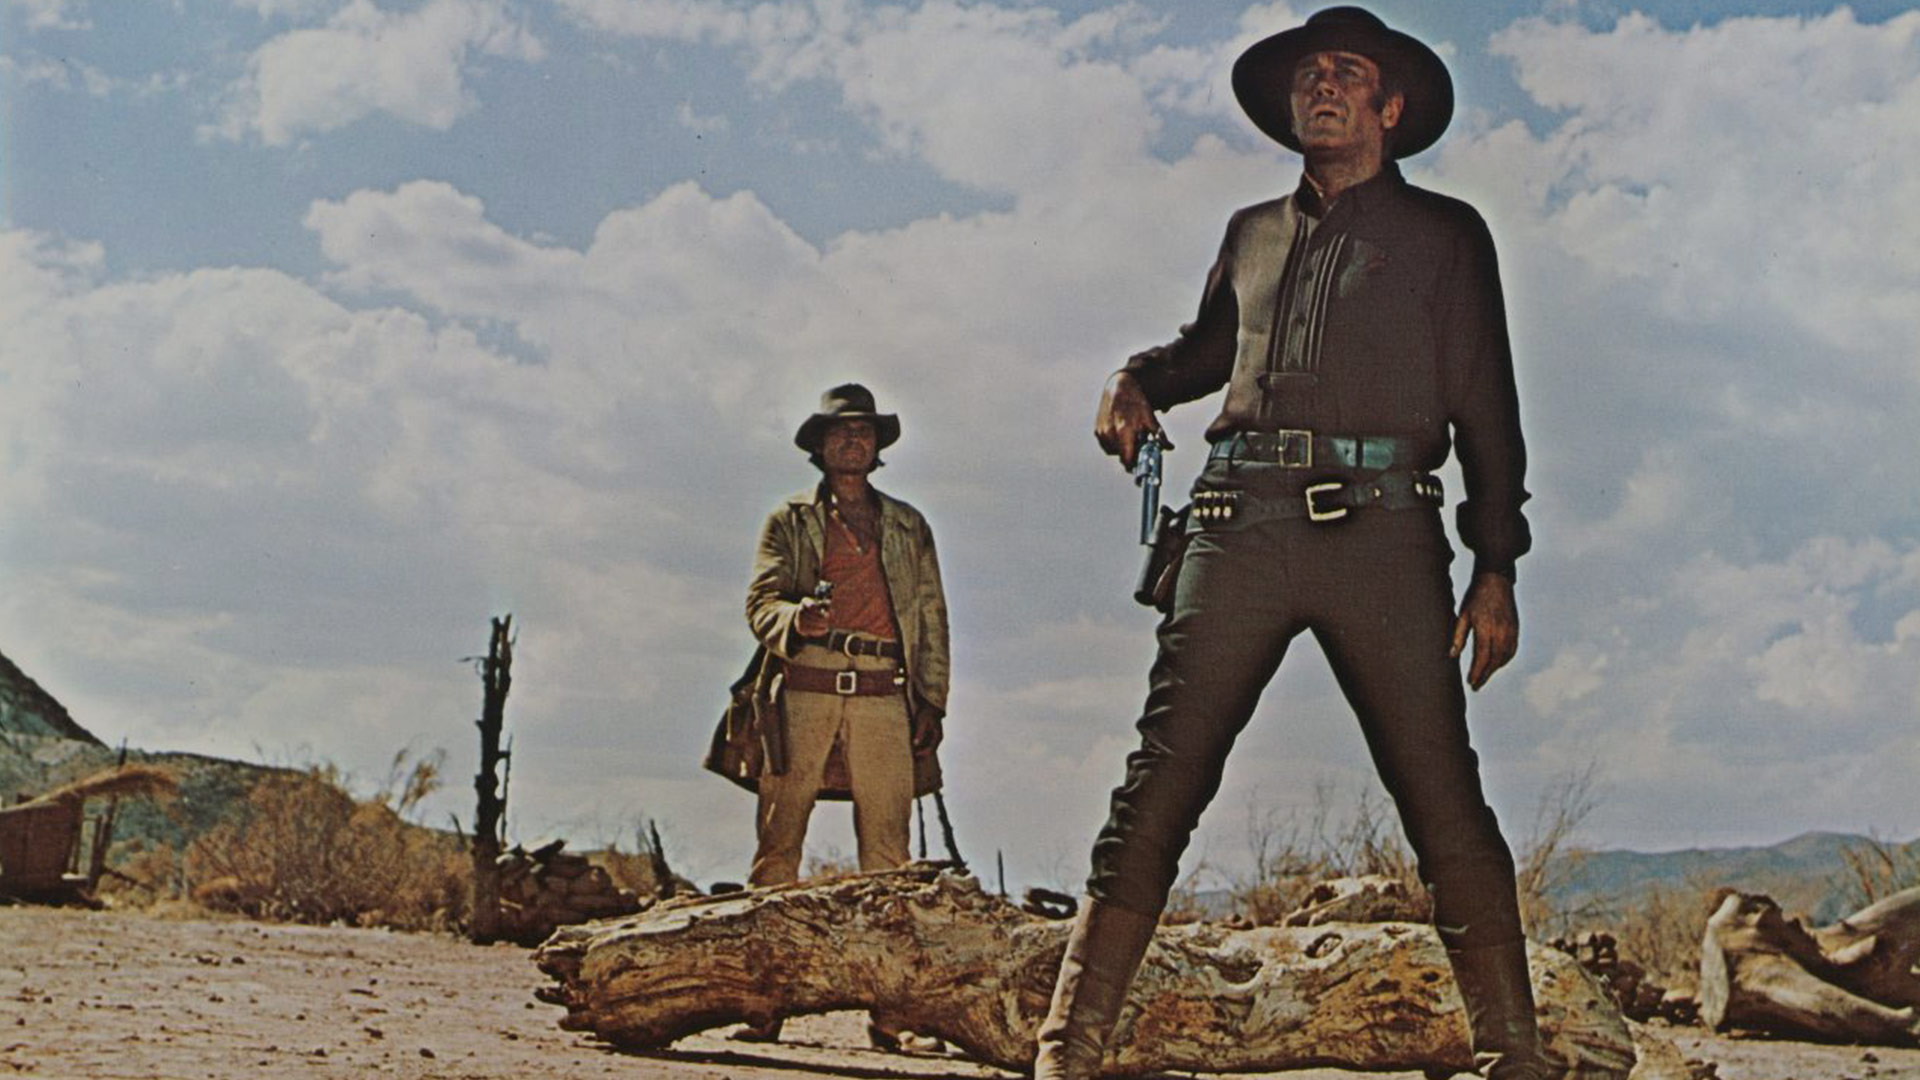 هنری در حال کشیدن اسلحه در فیلم  Once Upon A Time In The West